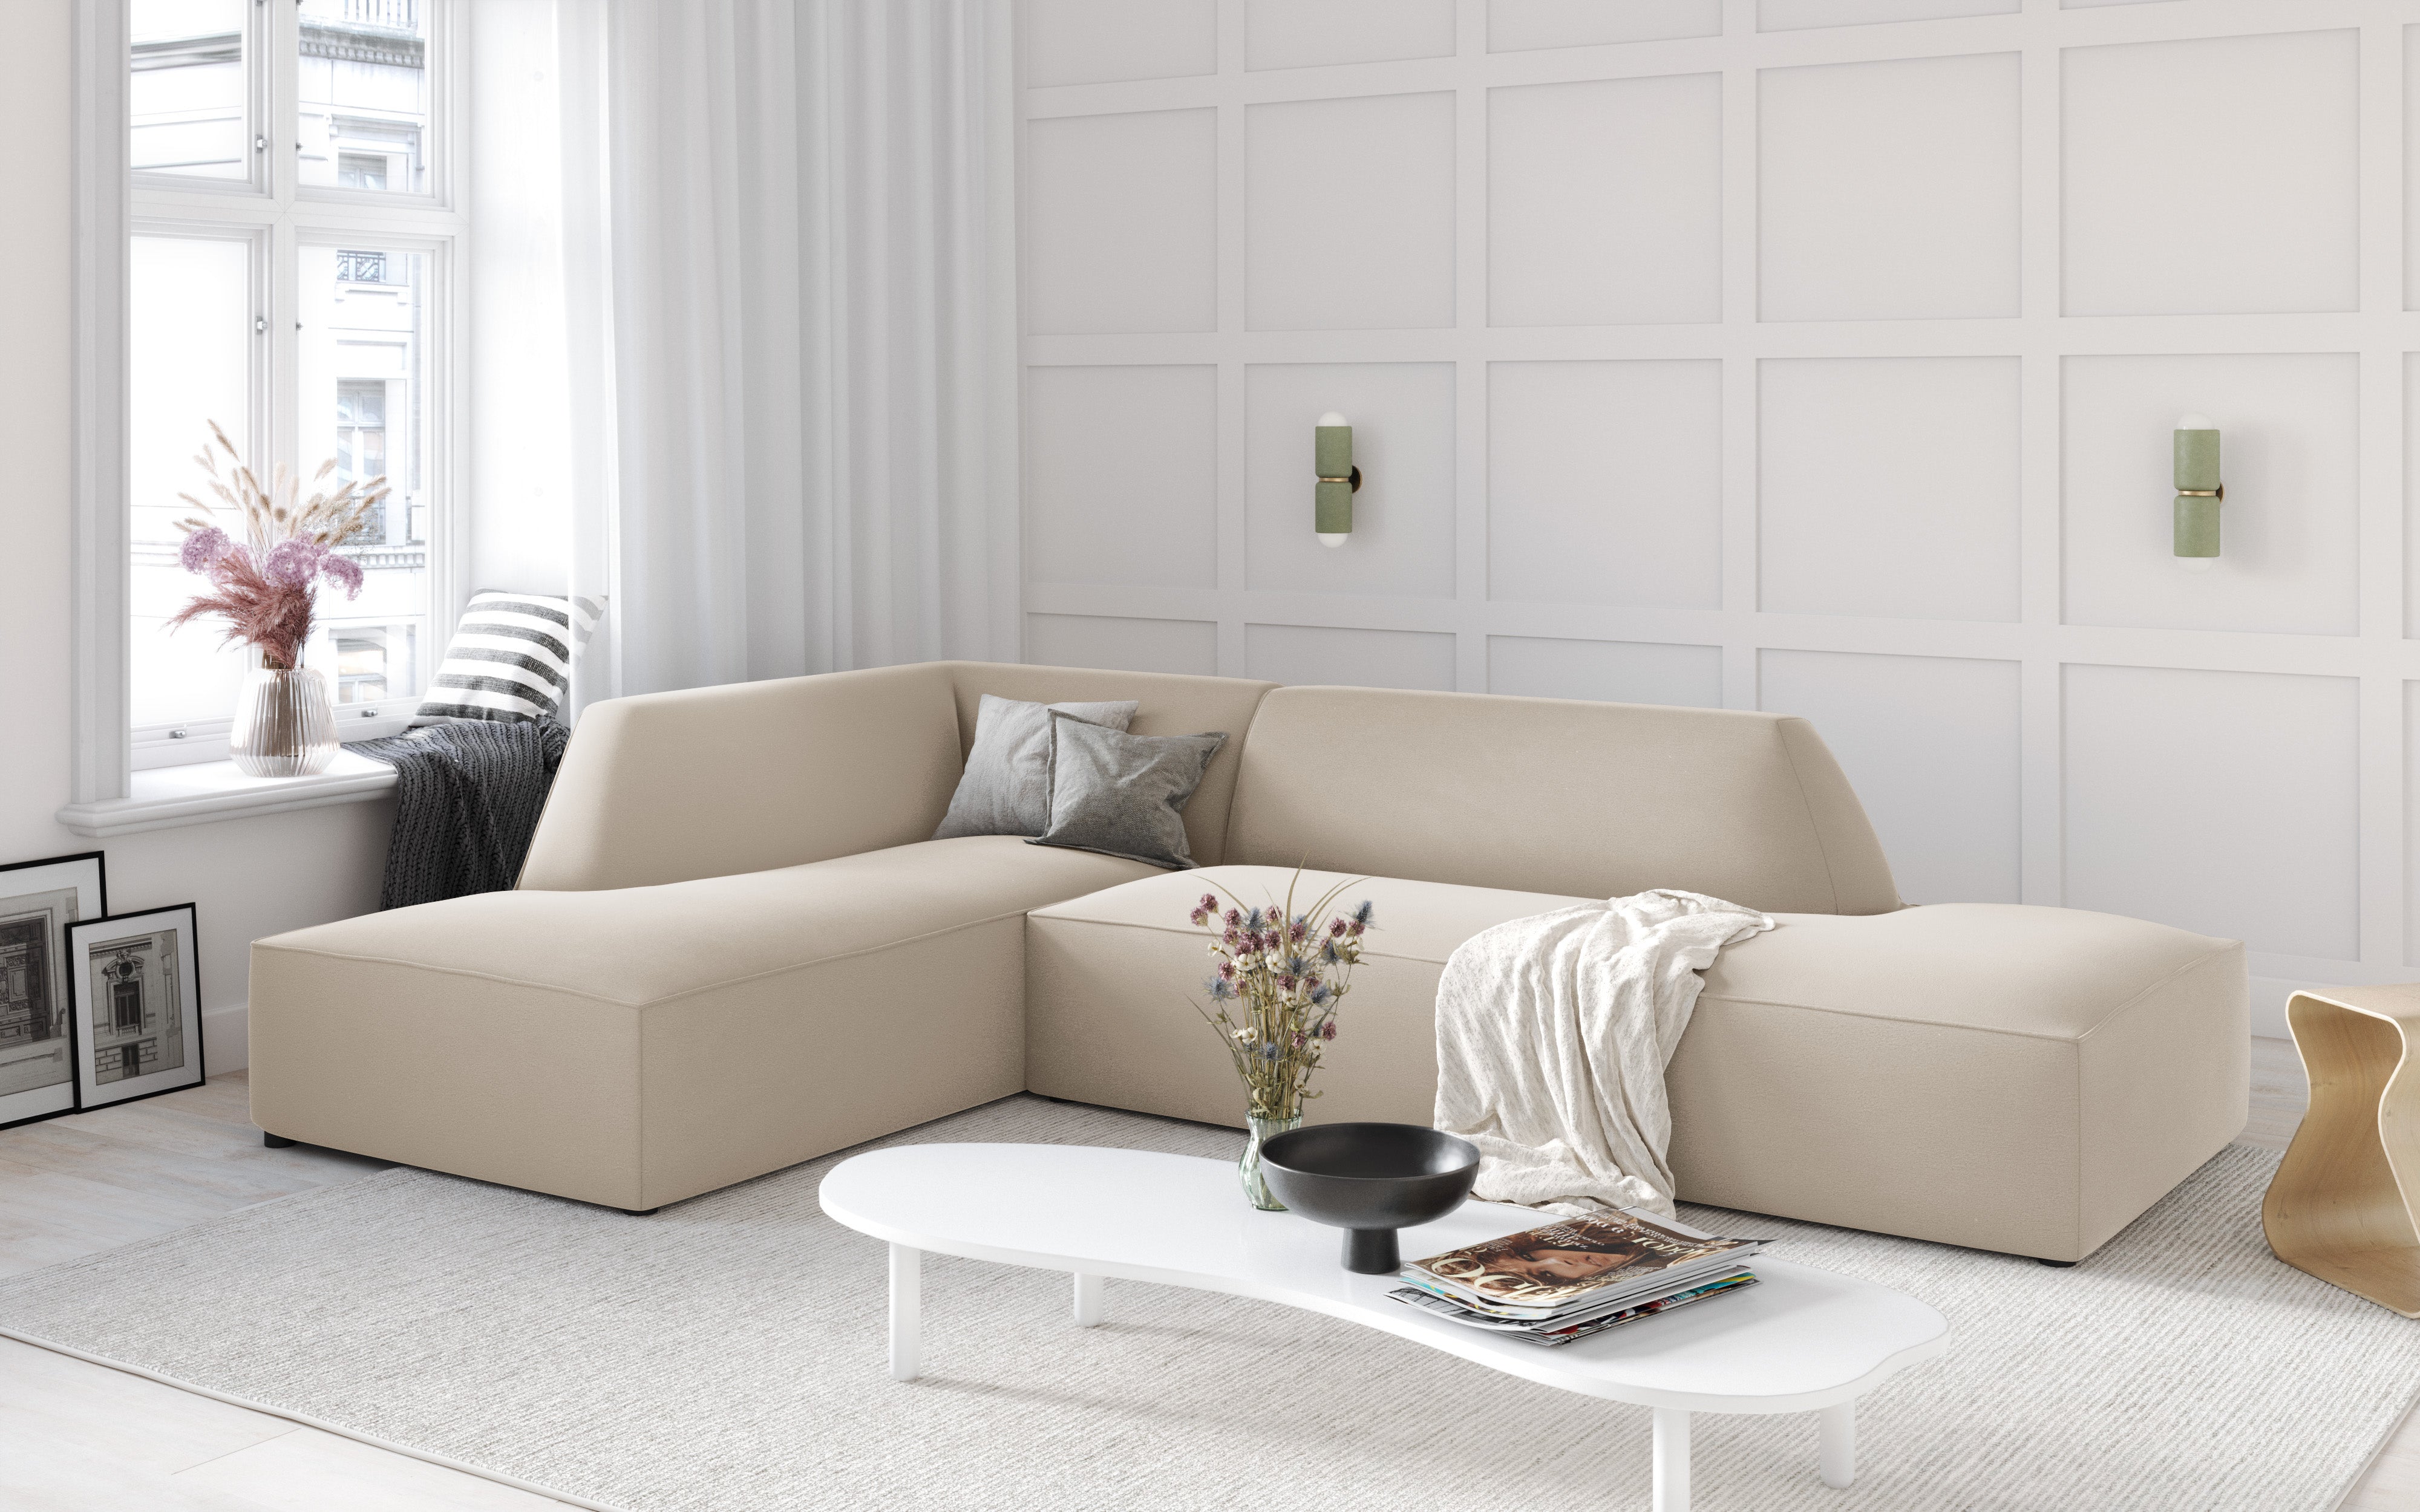 Beige sofa in the Scandinavian style